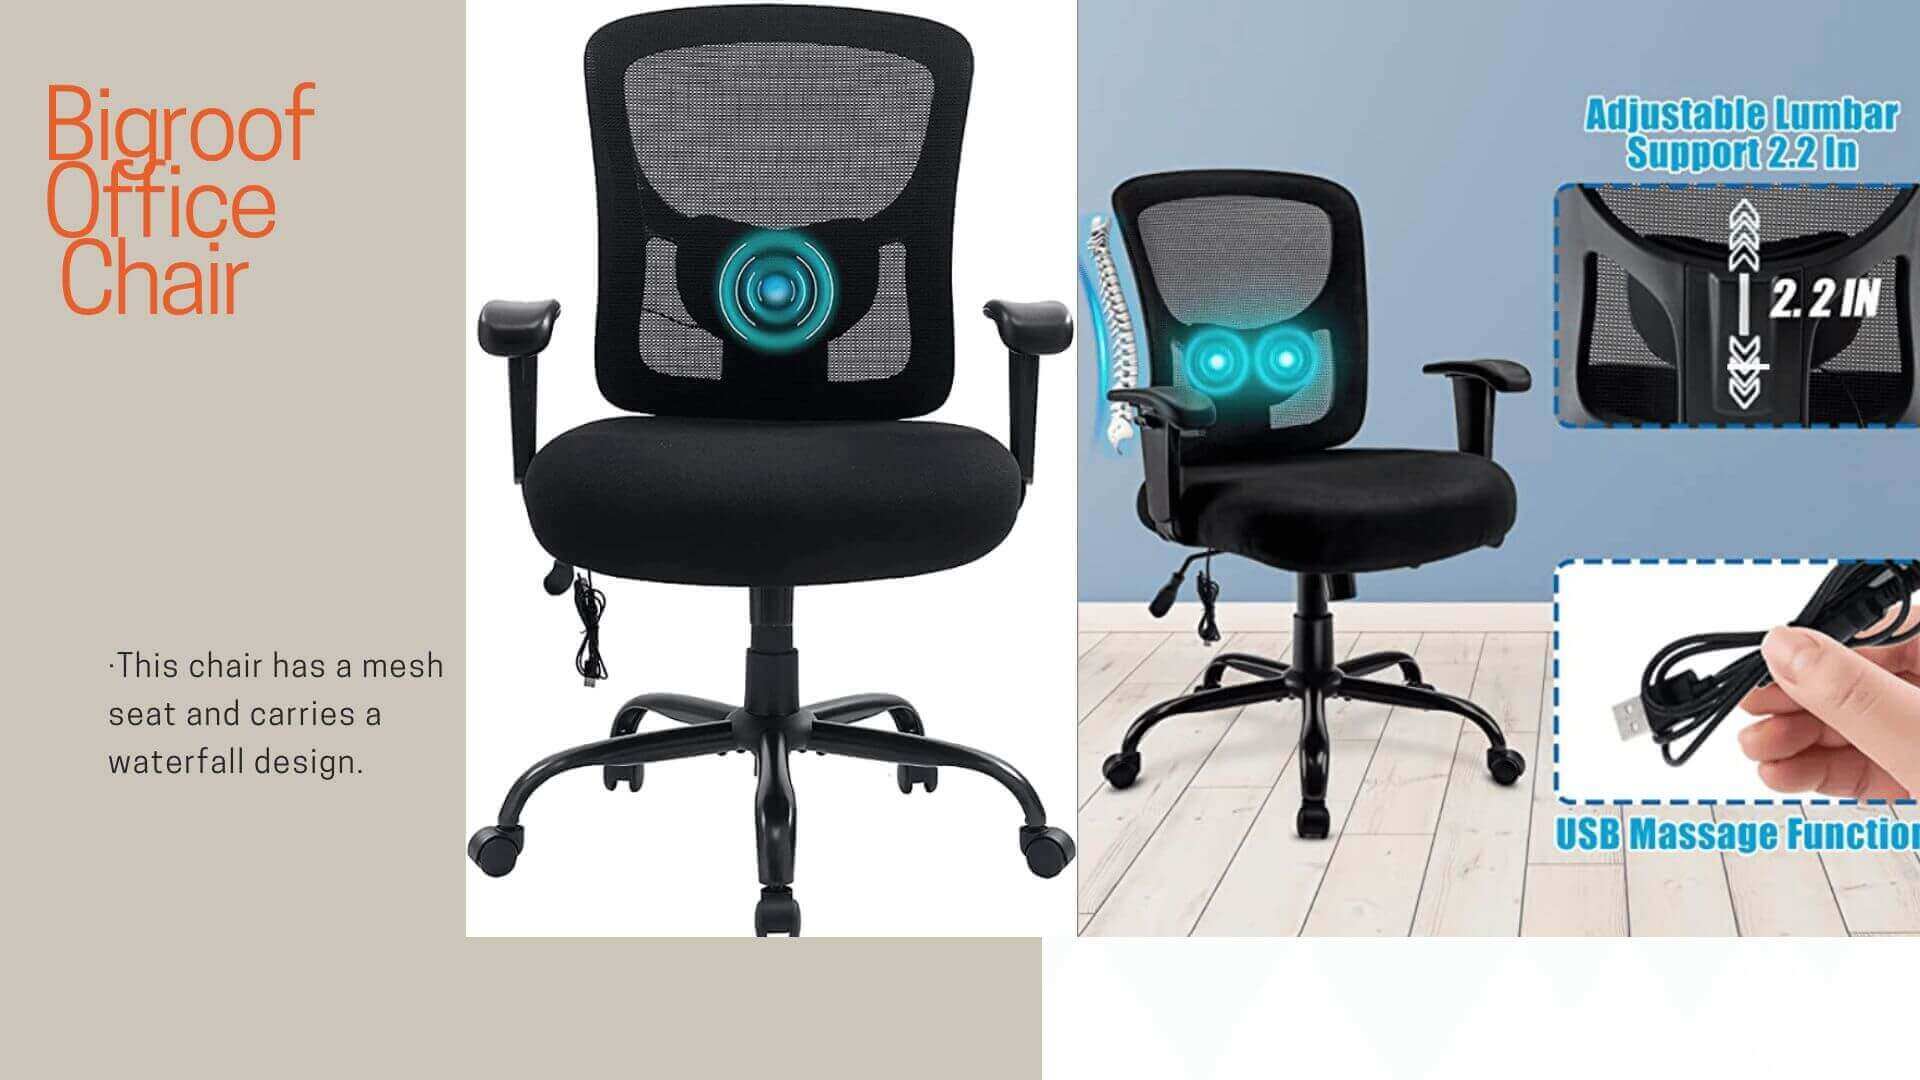 Bigroof Office Chair